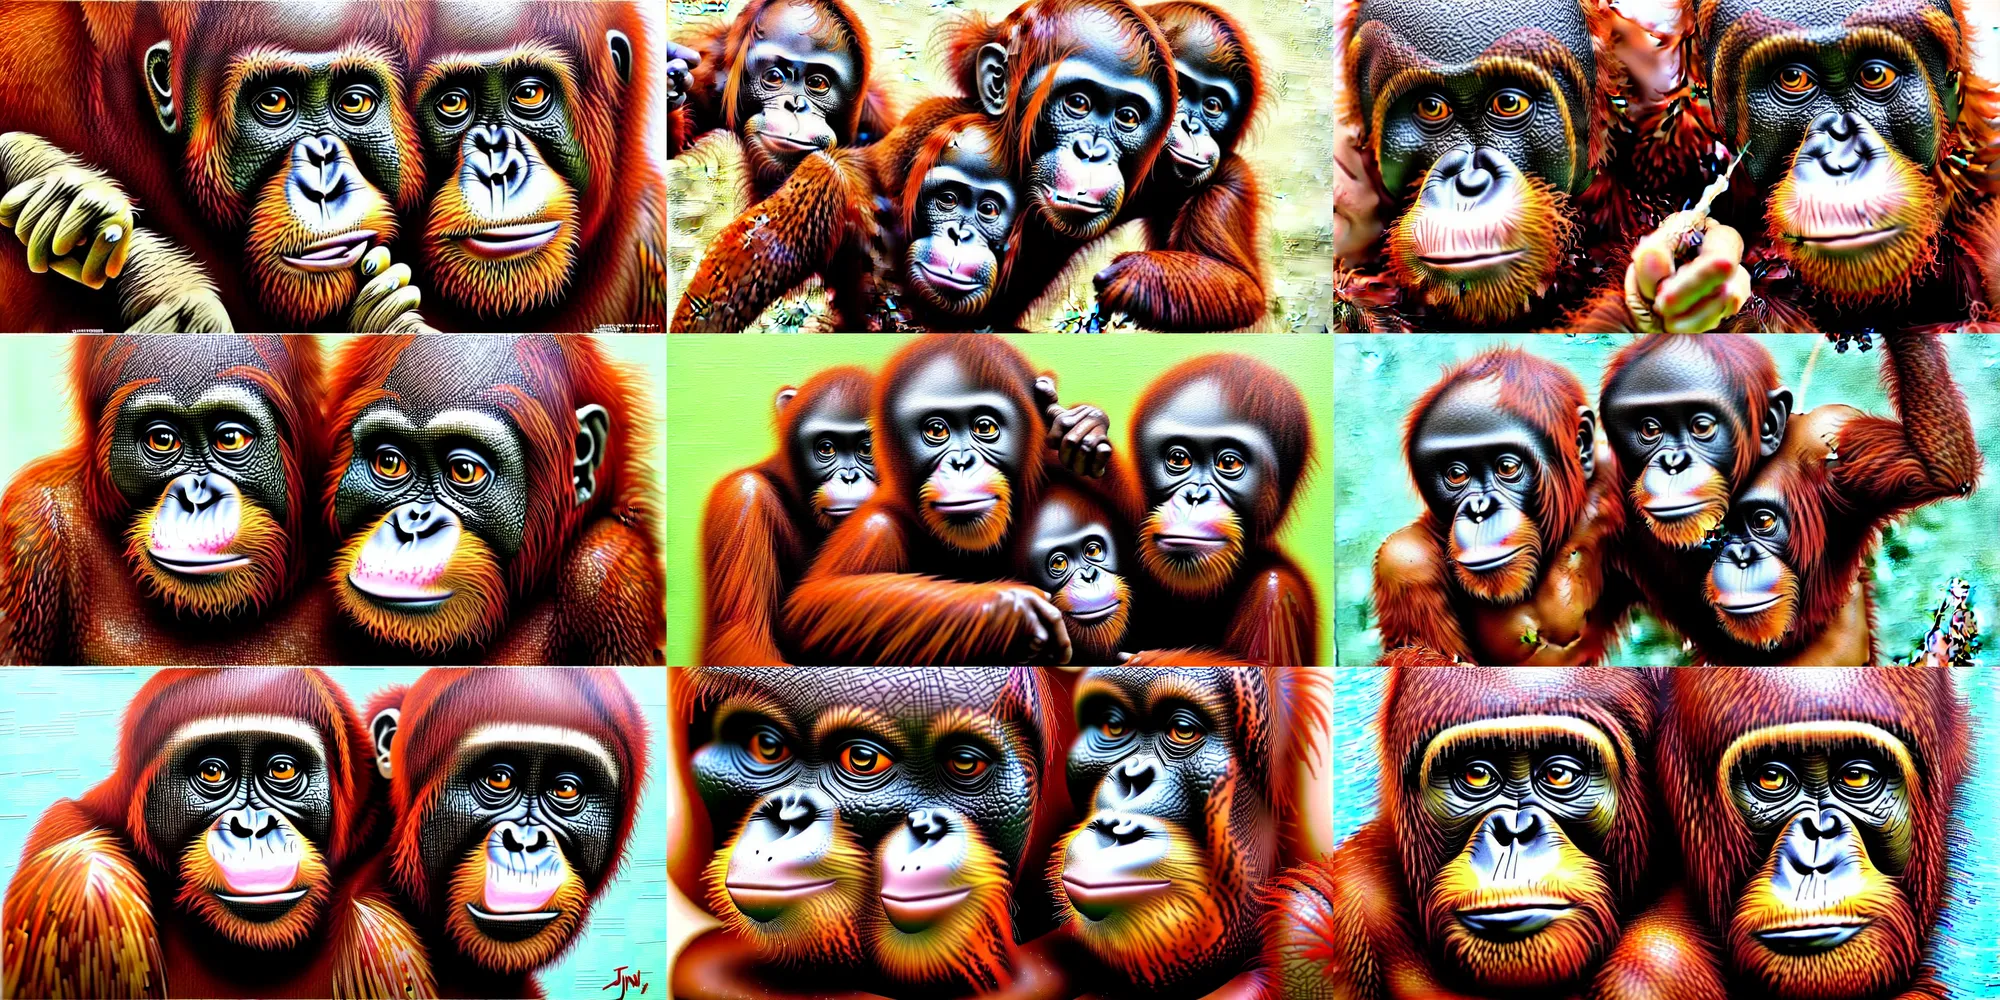 Prompt: graffiti art of baby orangutan painting jin yong highly detailed, hyper realistic